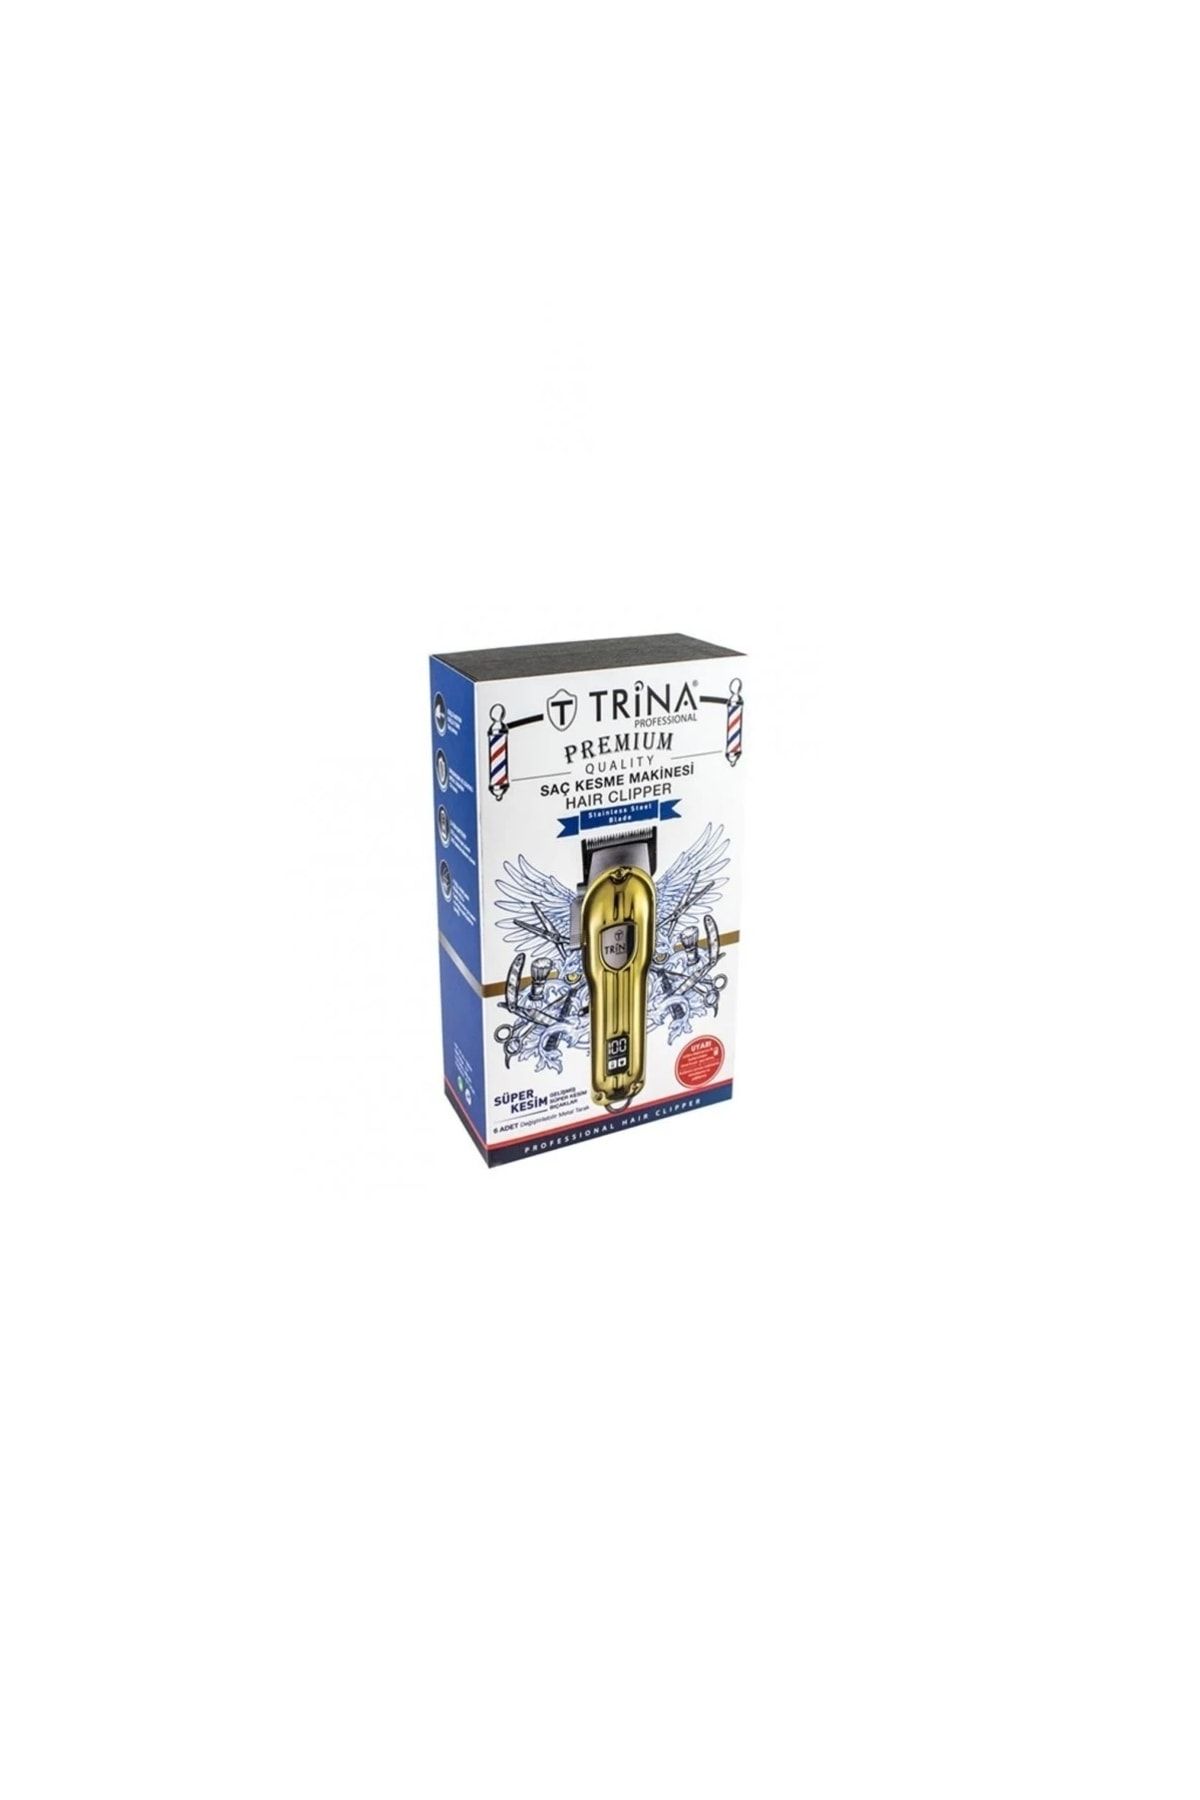 Trina Professional Hair Clipper Saç Kesme Makinesi (gold) Altın Renk Trnsacks0070